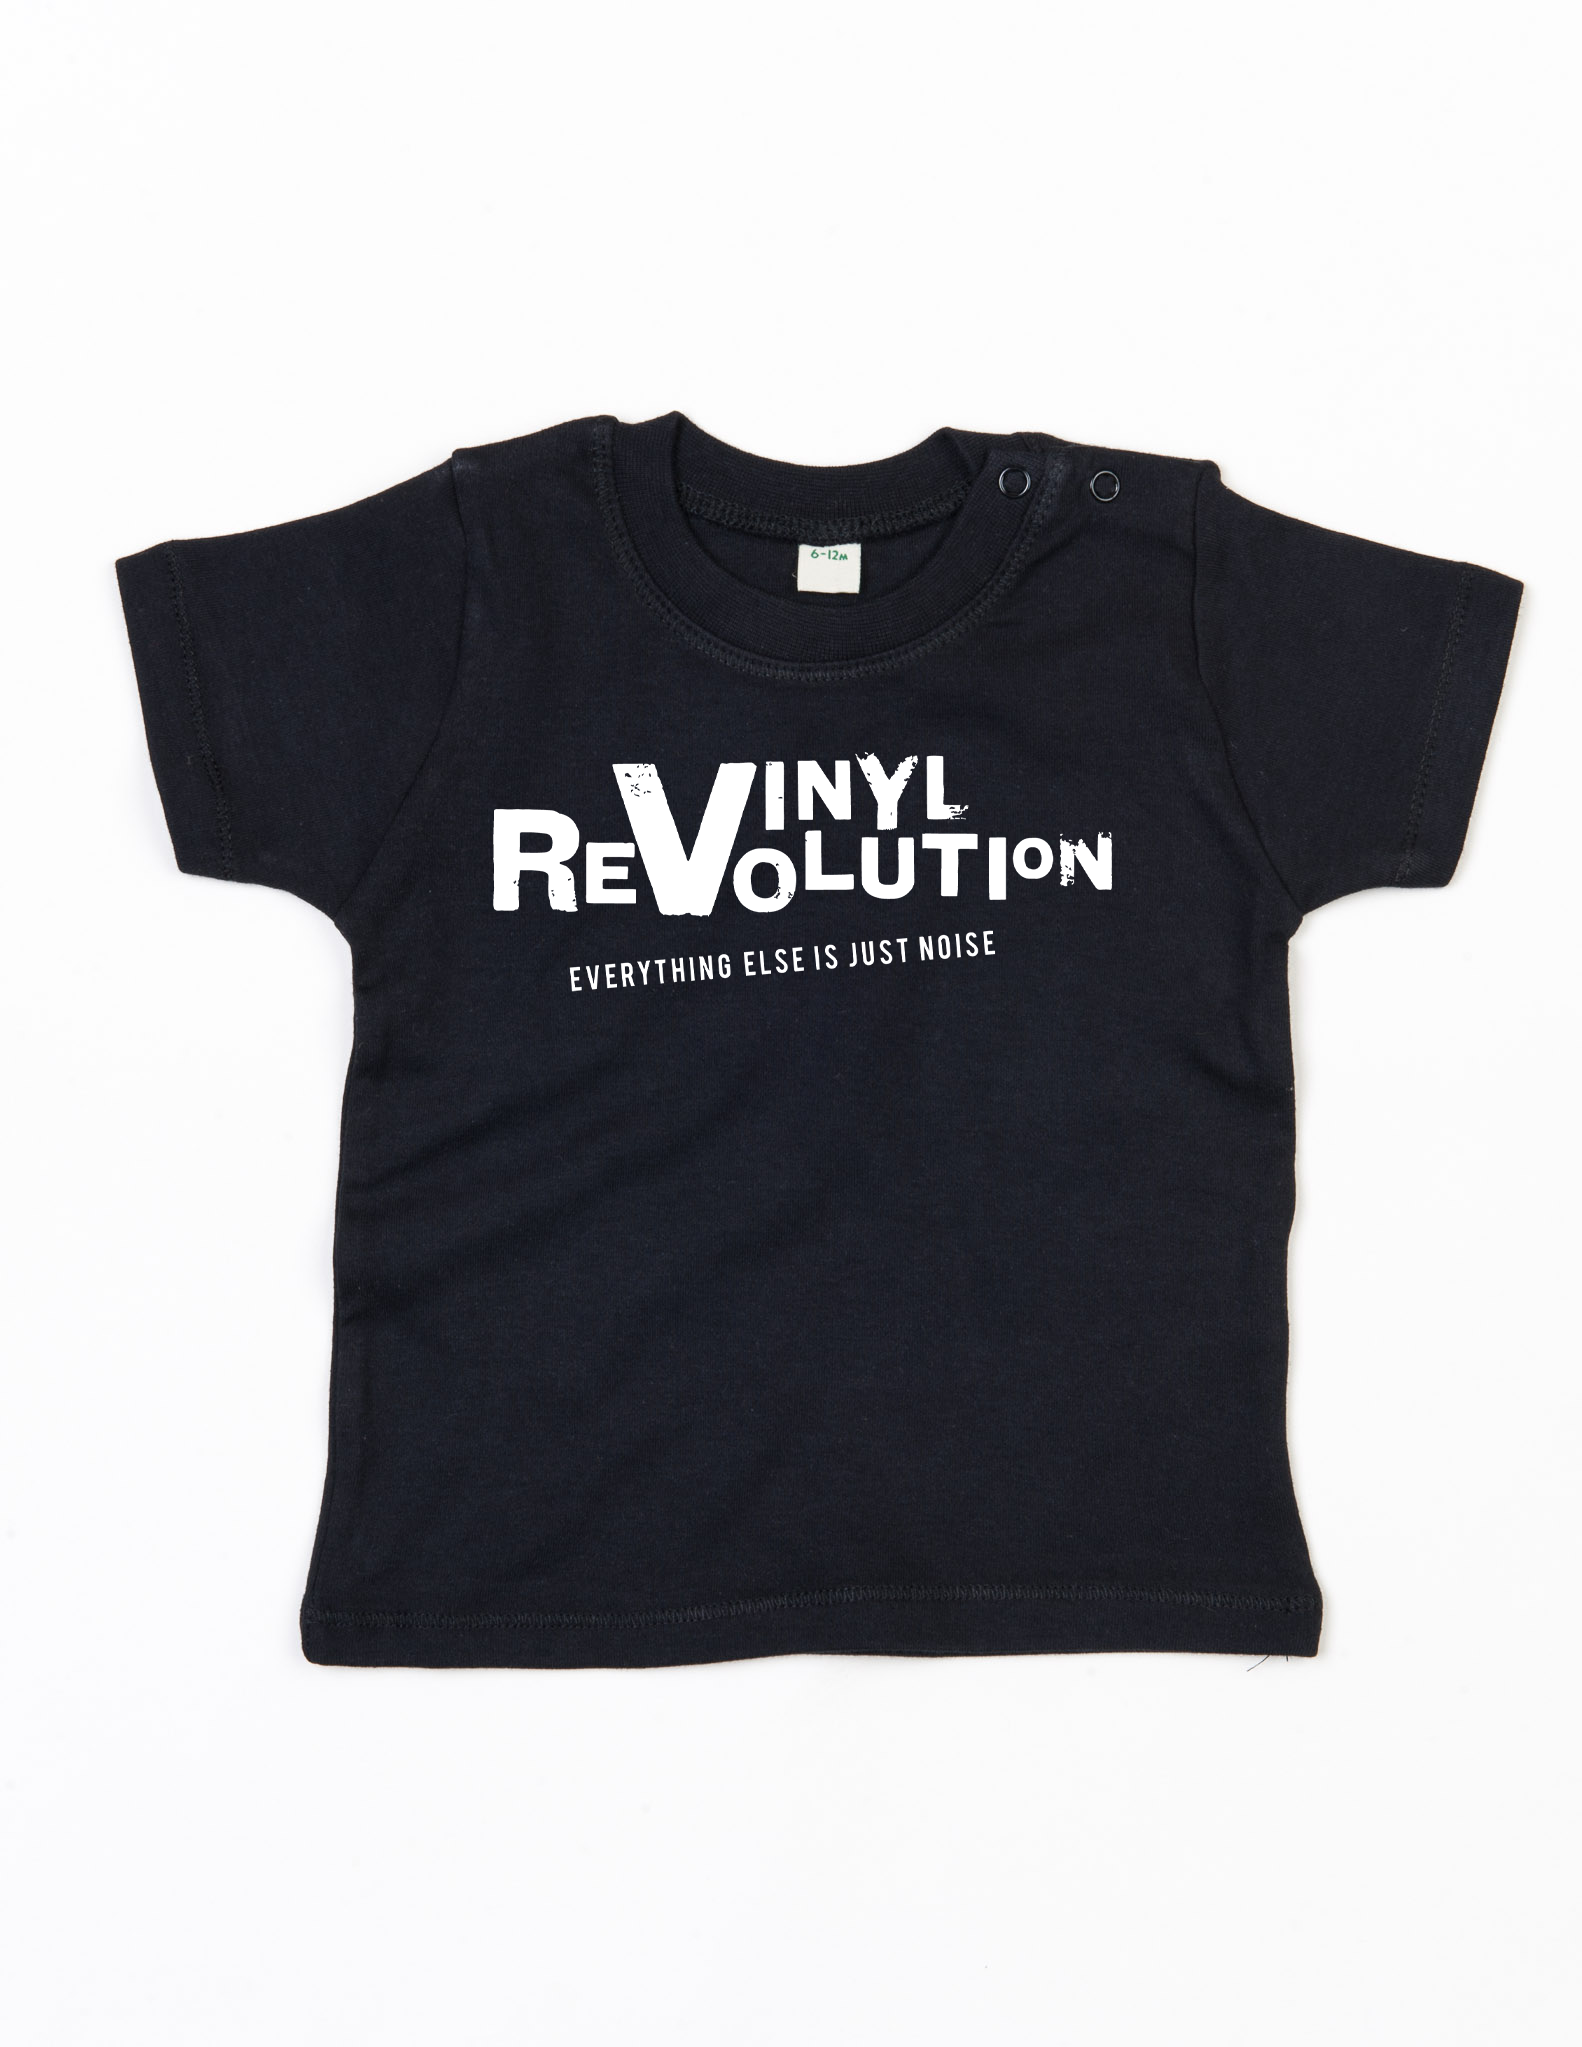 Vinyl Revolution' Organic Baby T-Shirt